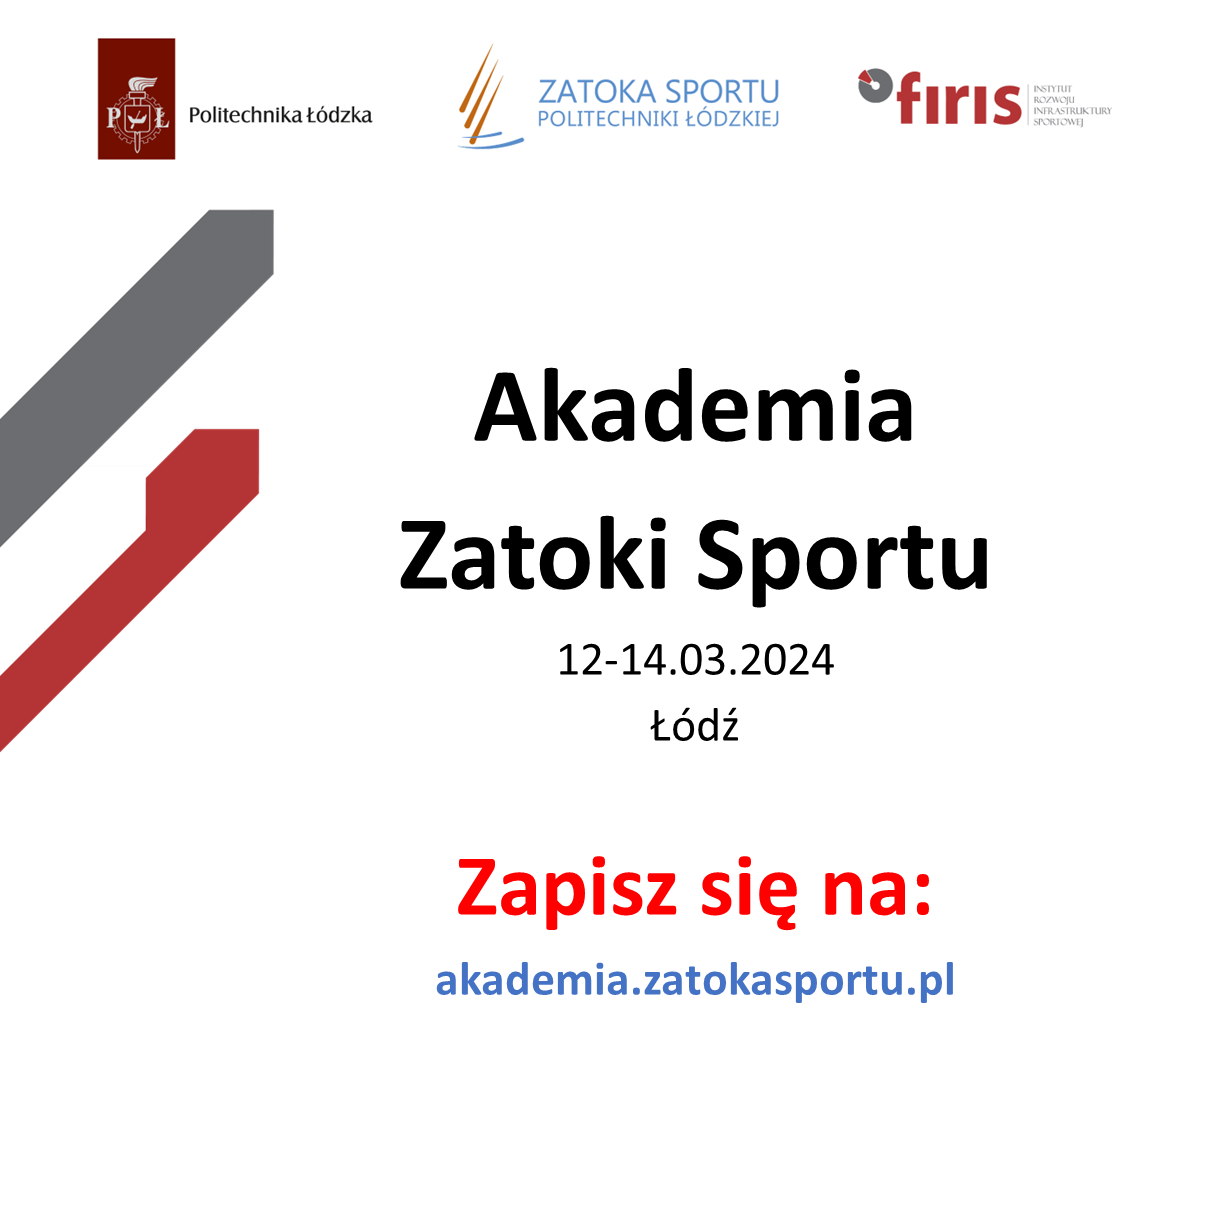 Akademia Zatoki Sportu, 13-14.03.2024